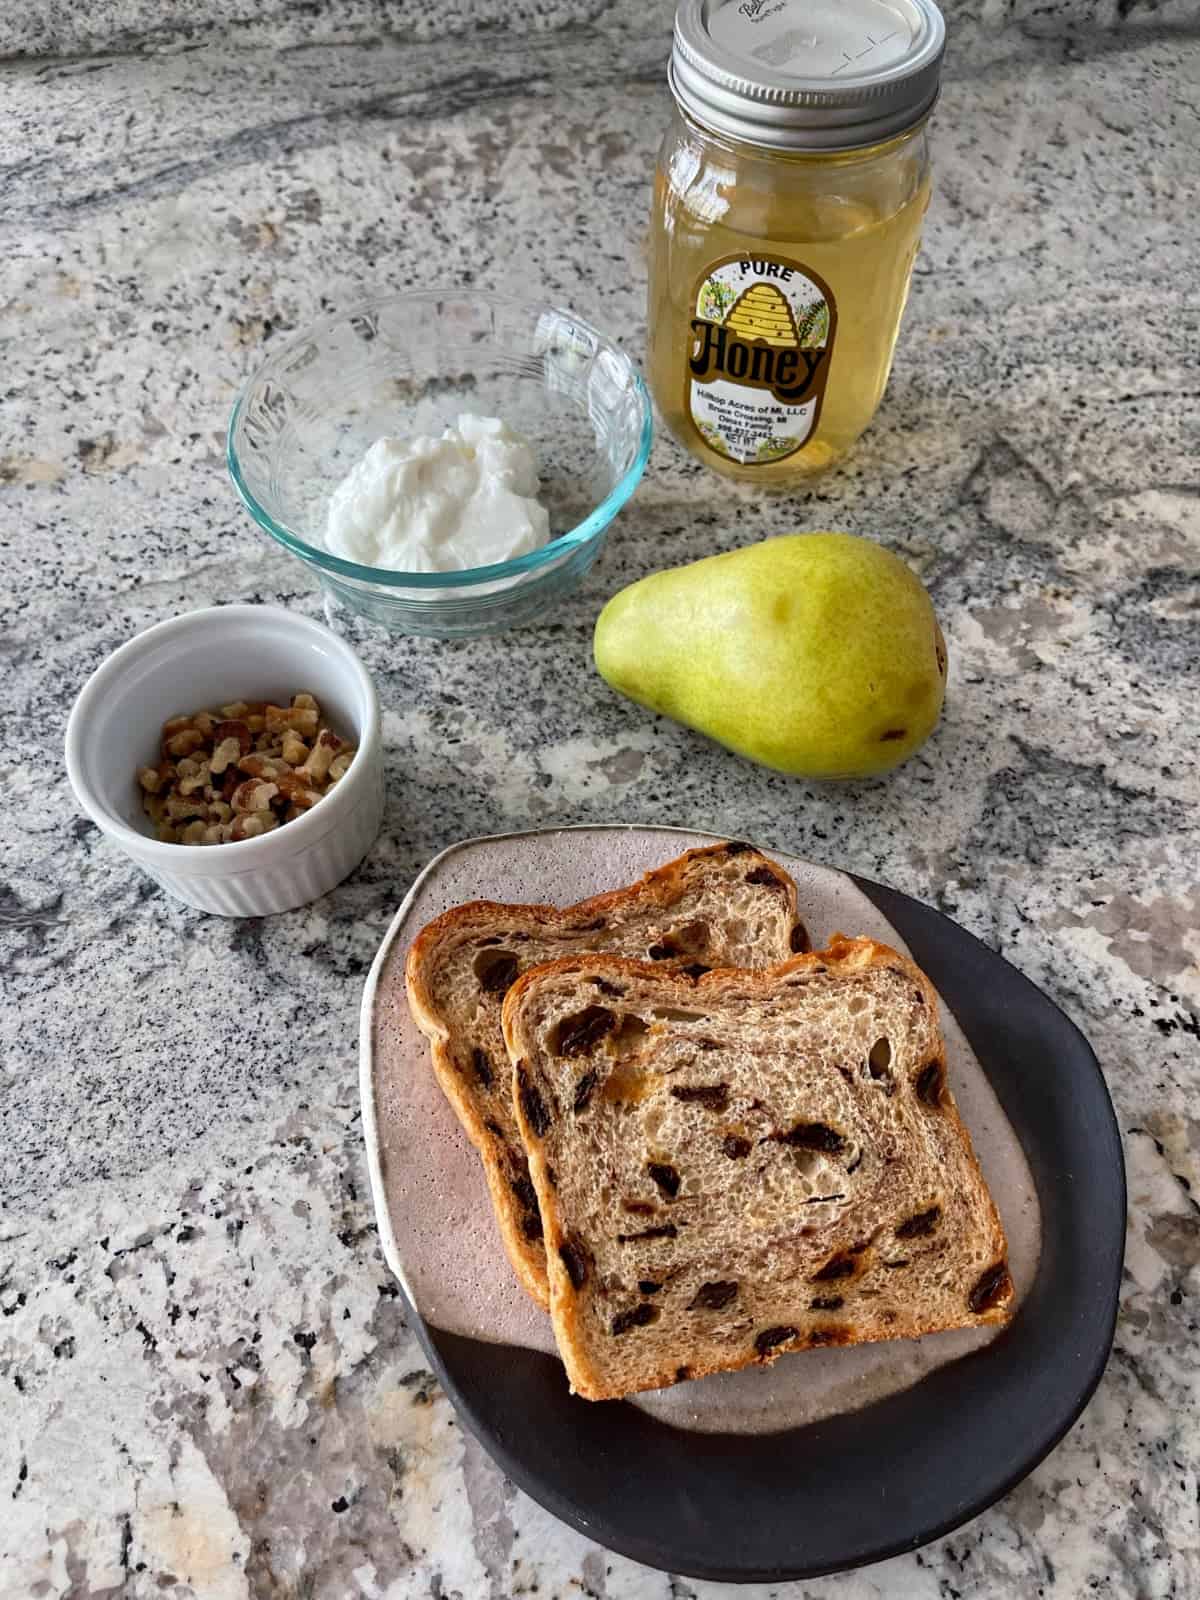 Ingredients including cinnamon raisin swirl bread, chopped walnuts, nonfat Greek yogurt, honey and a whole pear on granite counter.